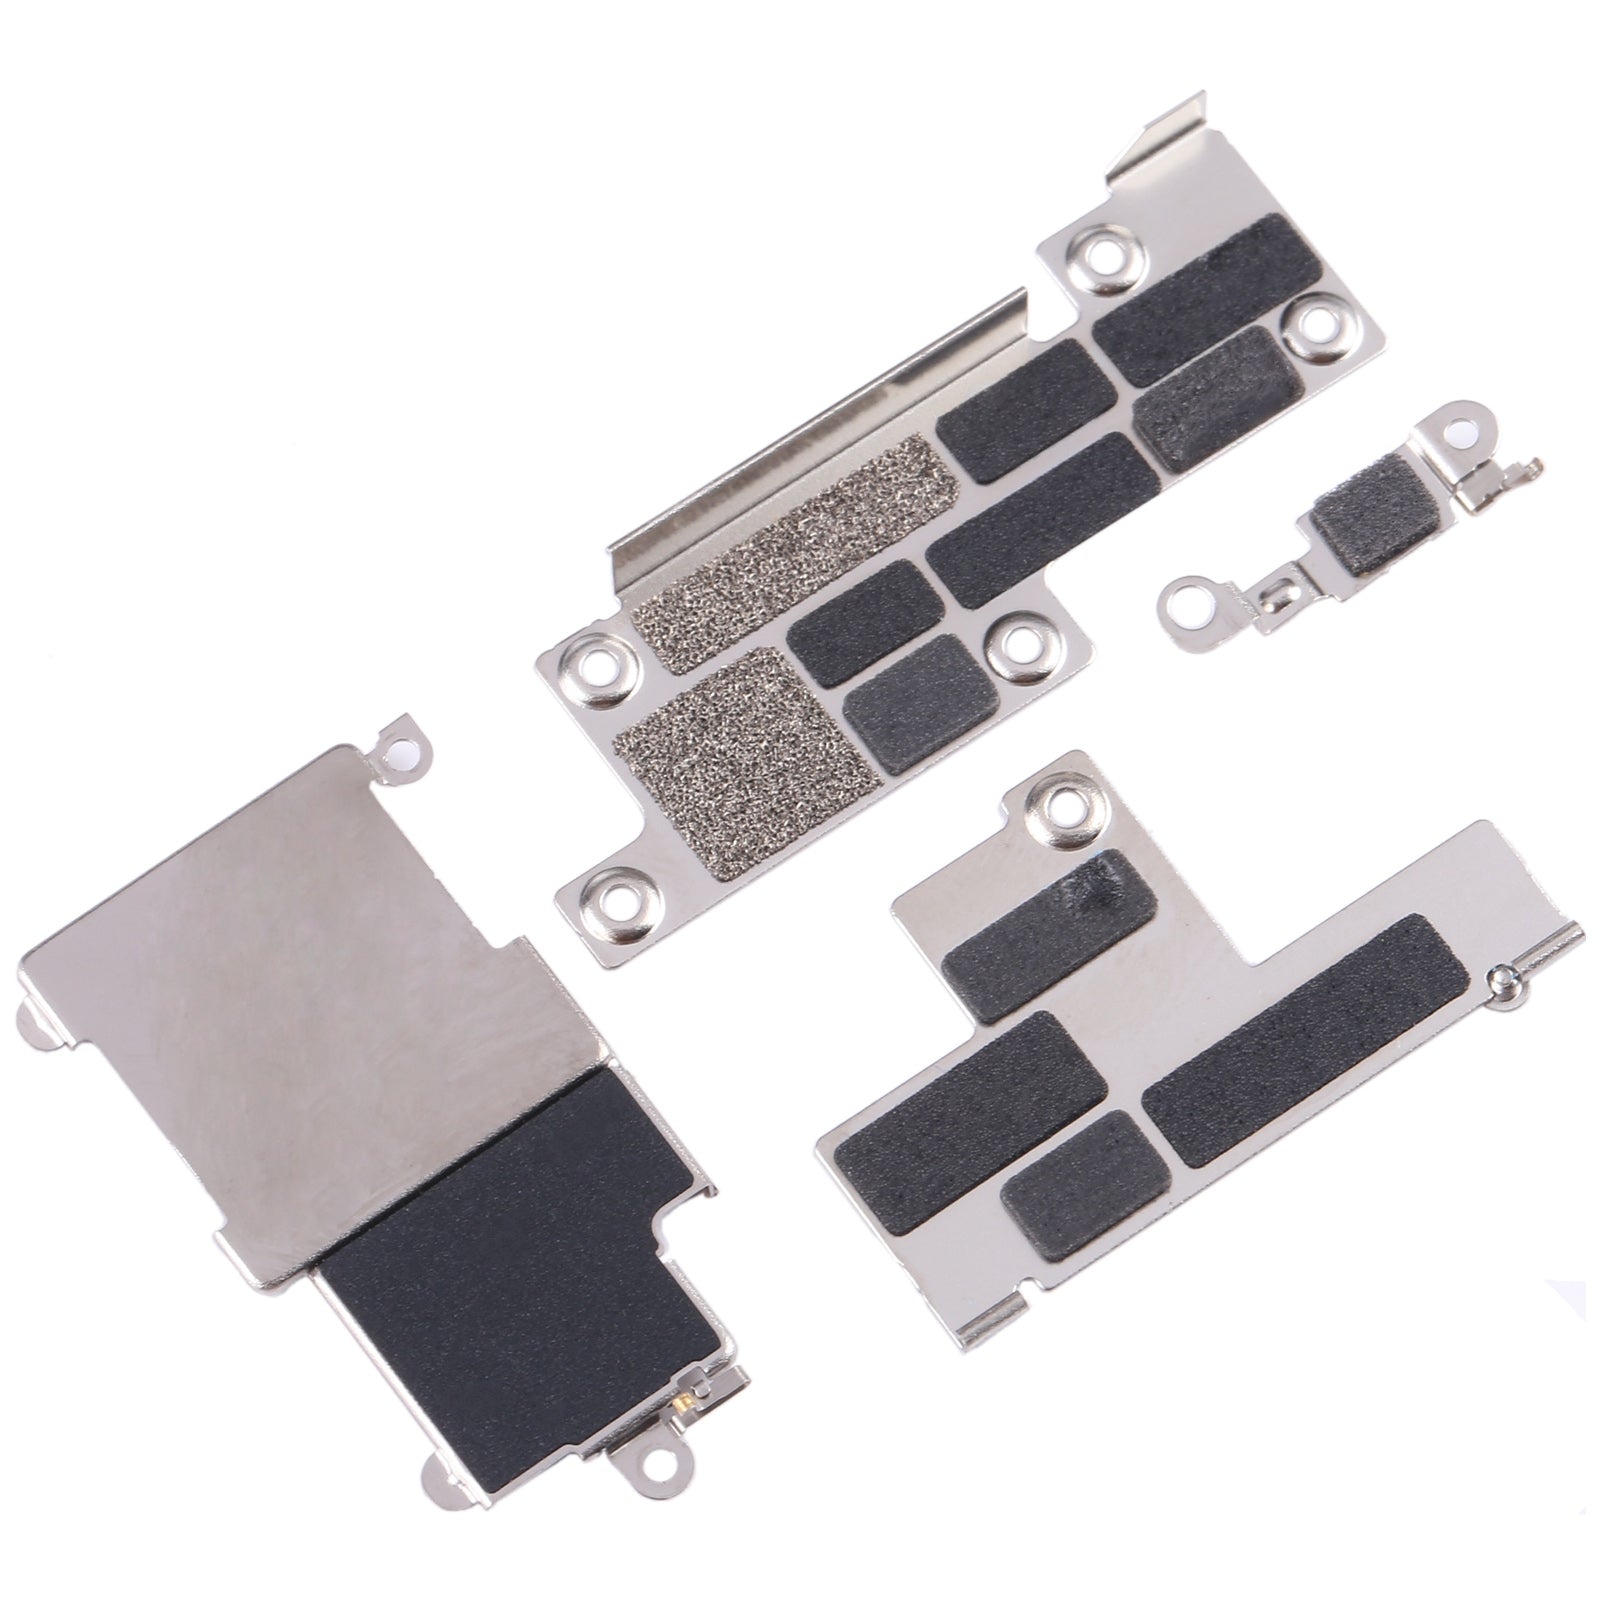 Pack of Internal Metal Parts iPhone 12 Mini